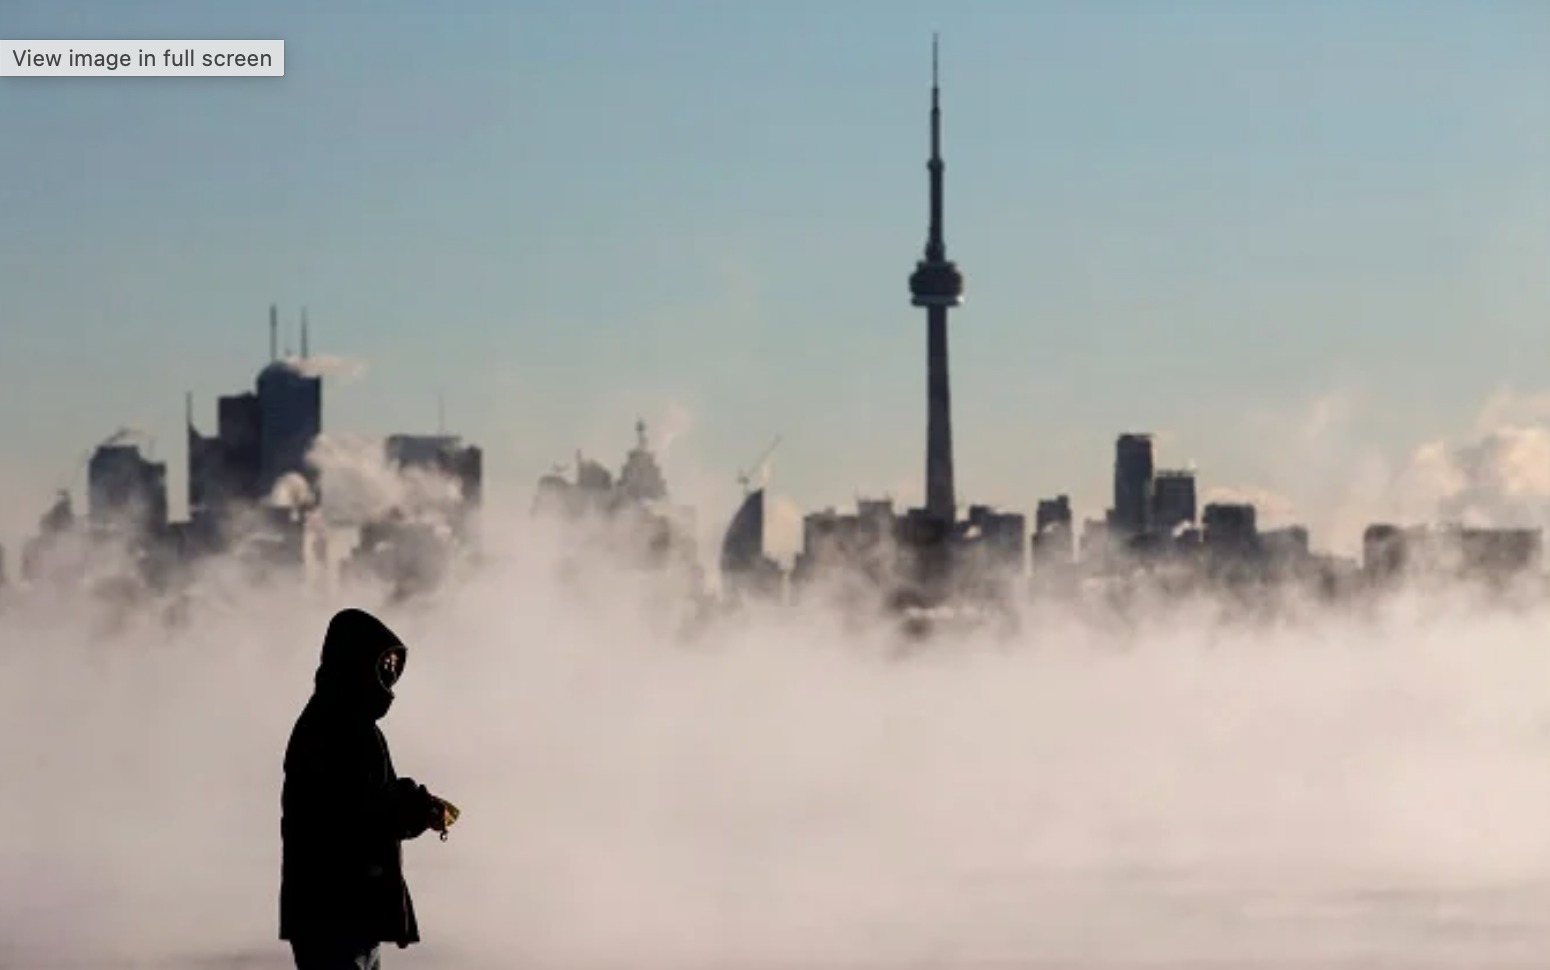 Toronto – Bundle Up, It’s Gonna Get Real Cold